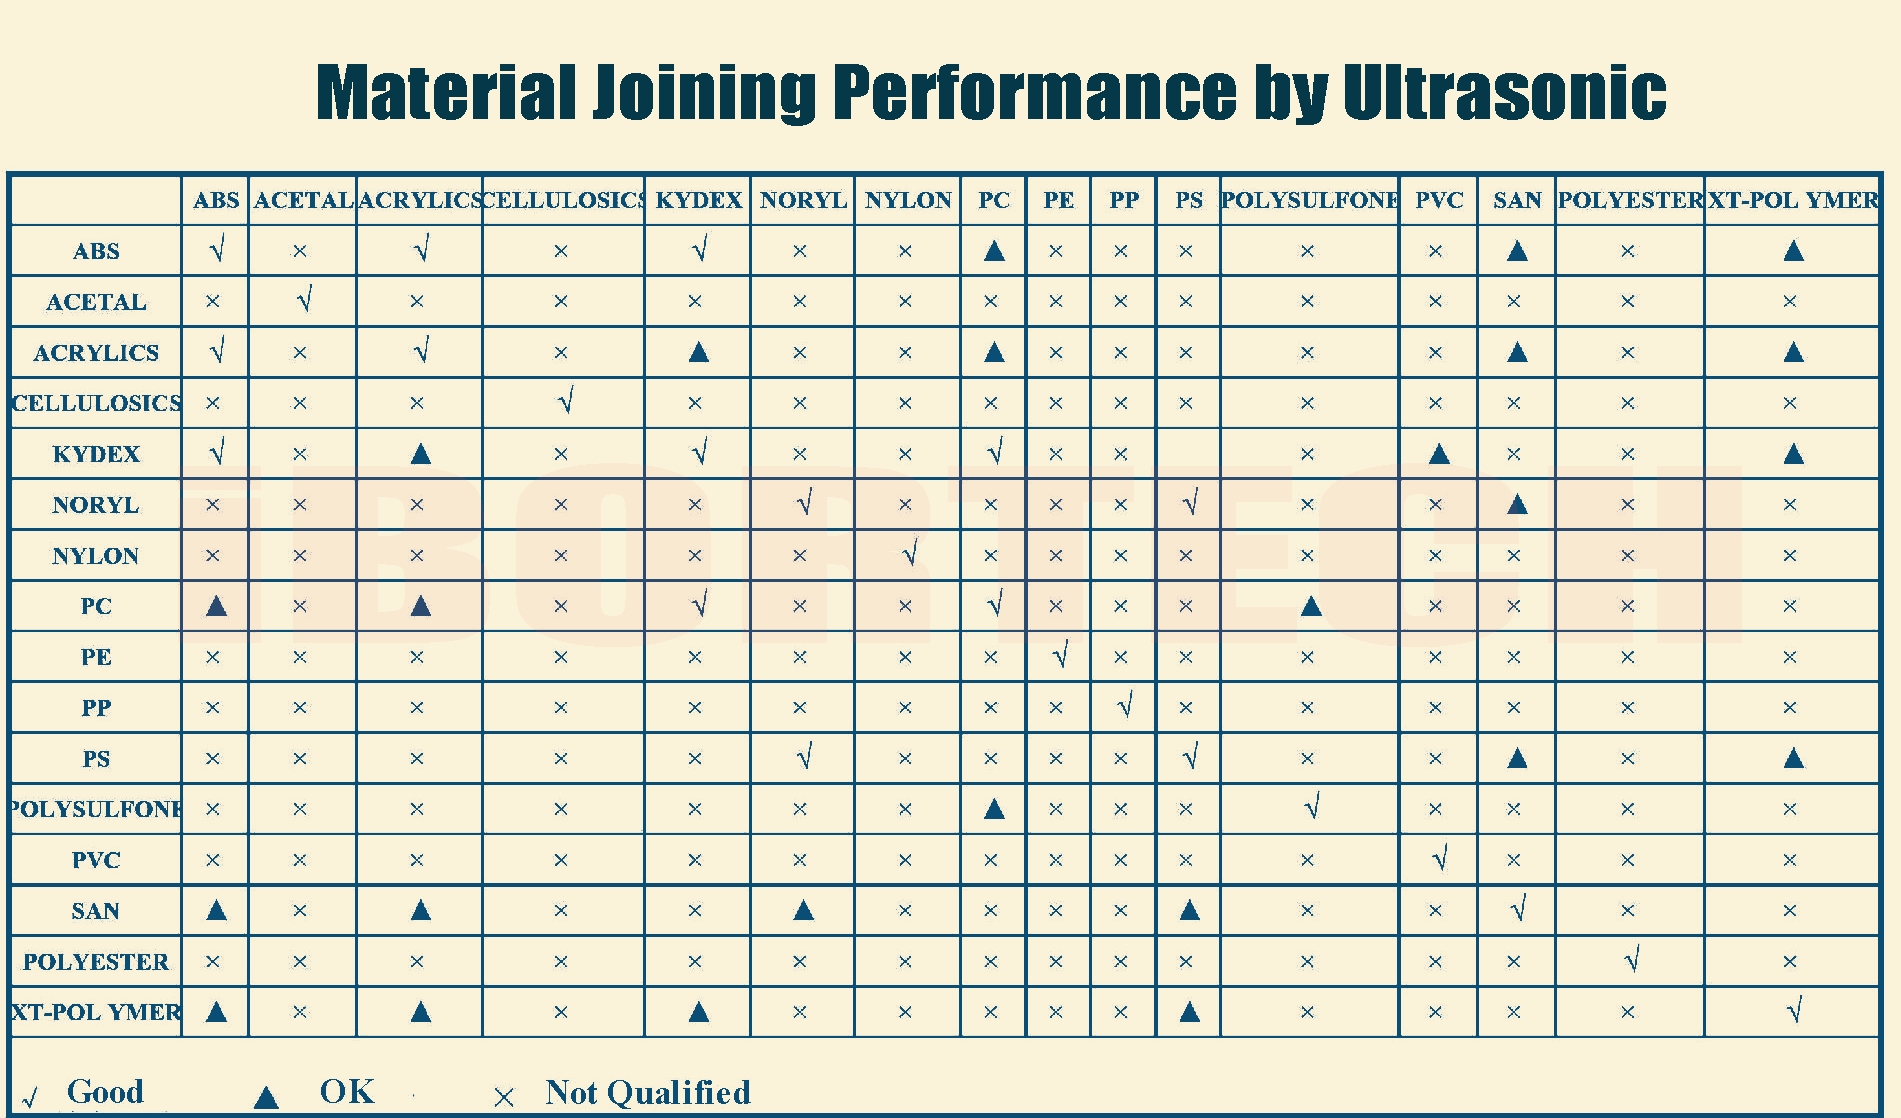 Ultrasonic Jointing Process Performance